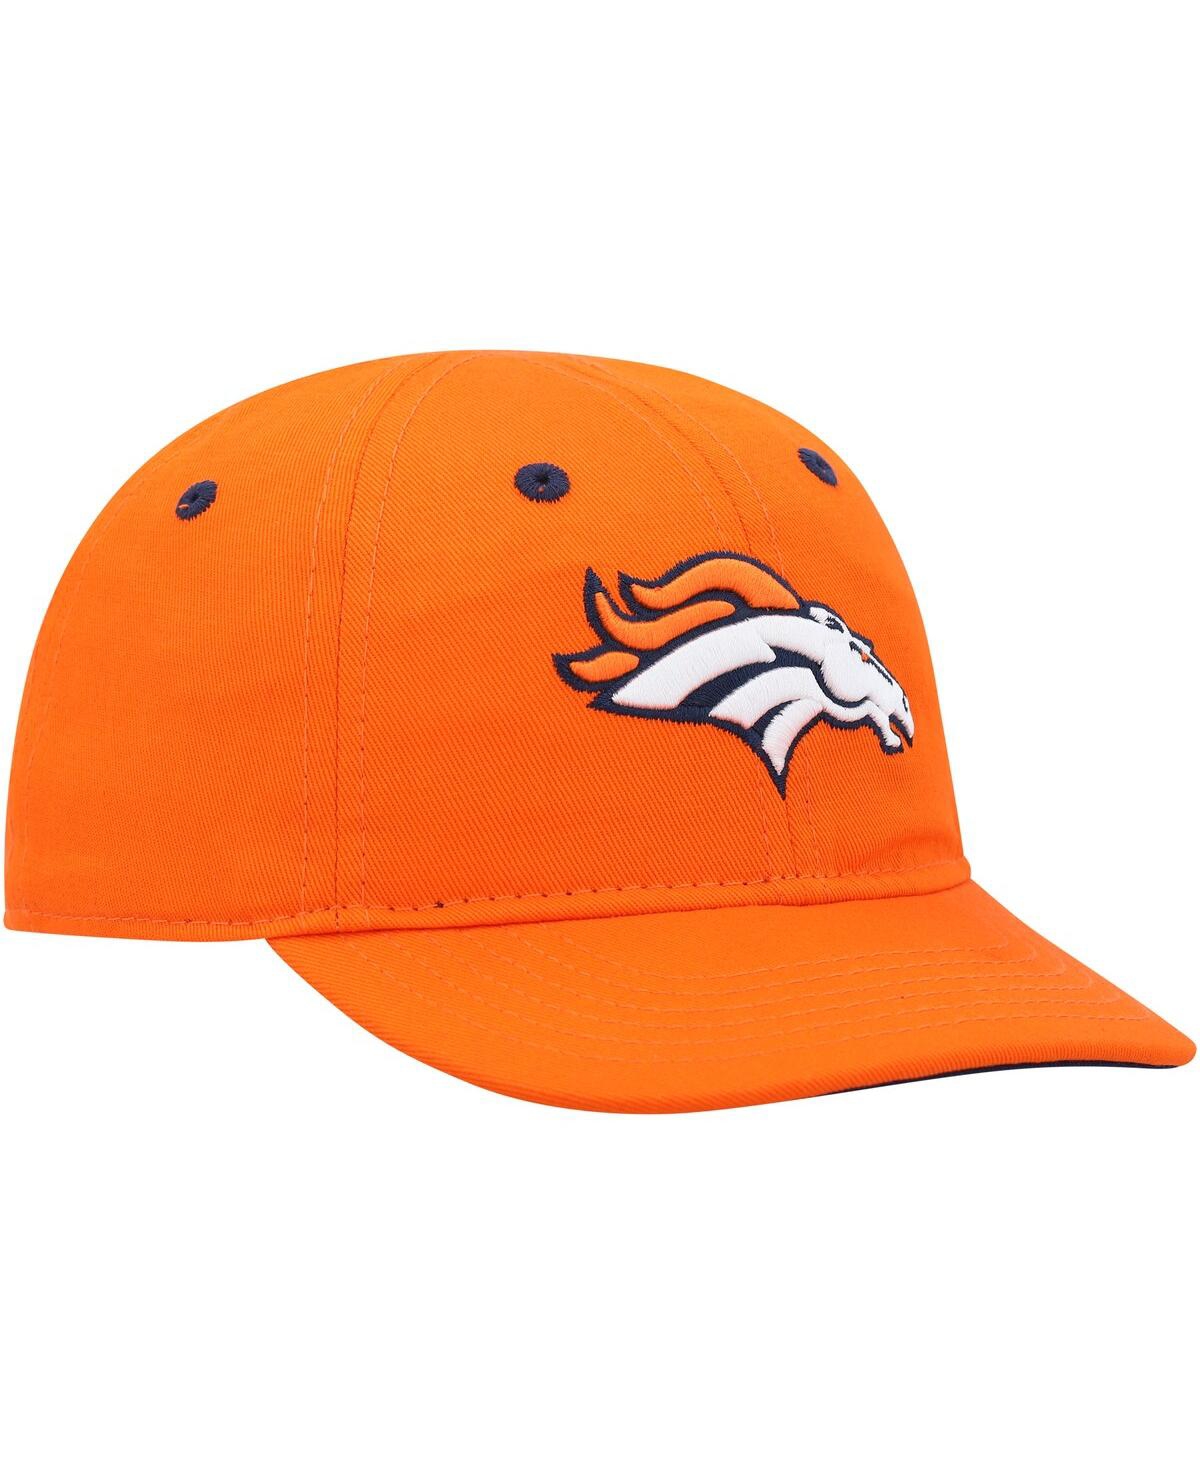 Shop Outerstuff Baby Boys And Girls Orange Denver Broncos Team Slouch Flex Hat